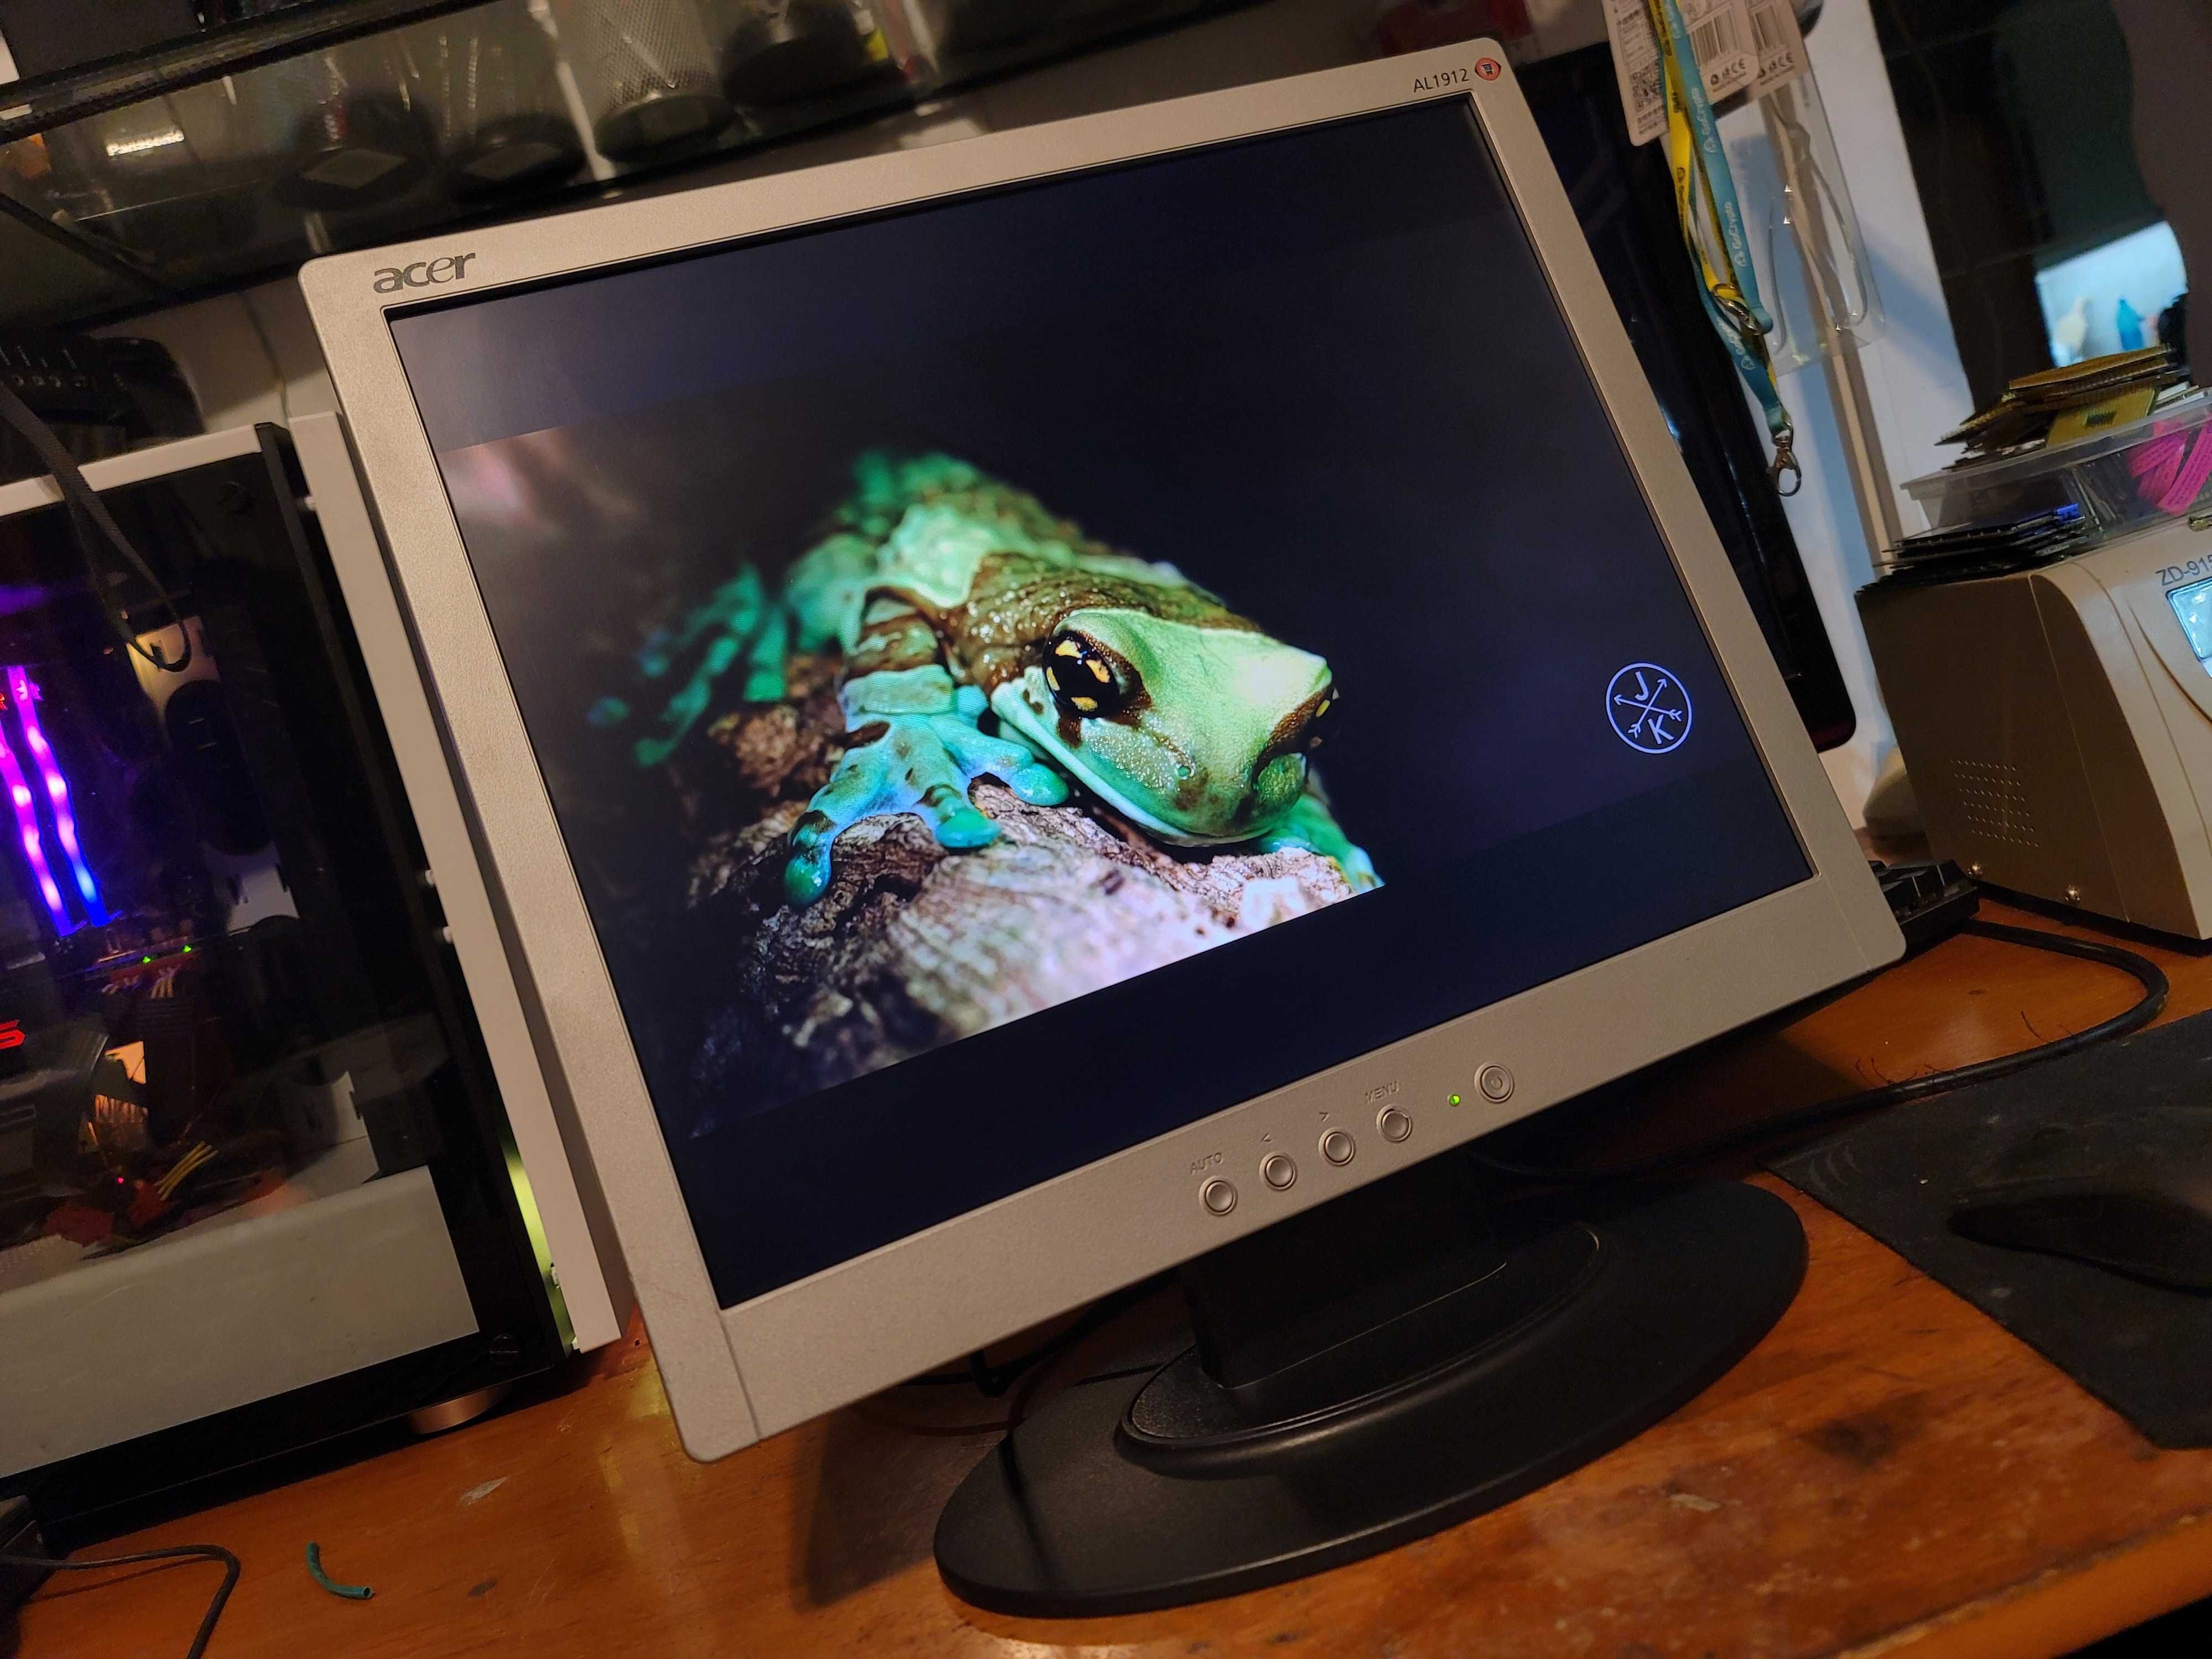 Monitor Acer AL1912 , 19 inch , culori foarte bune .